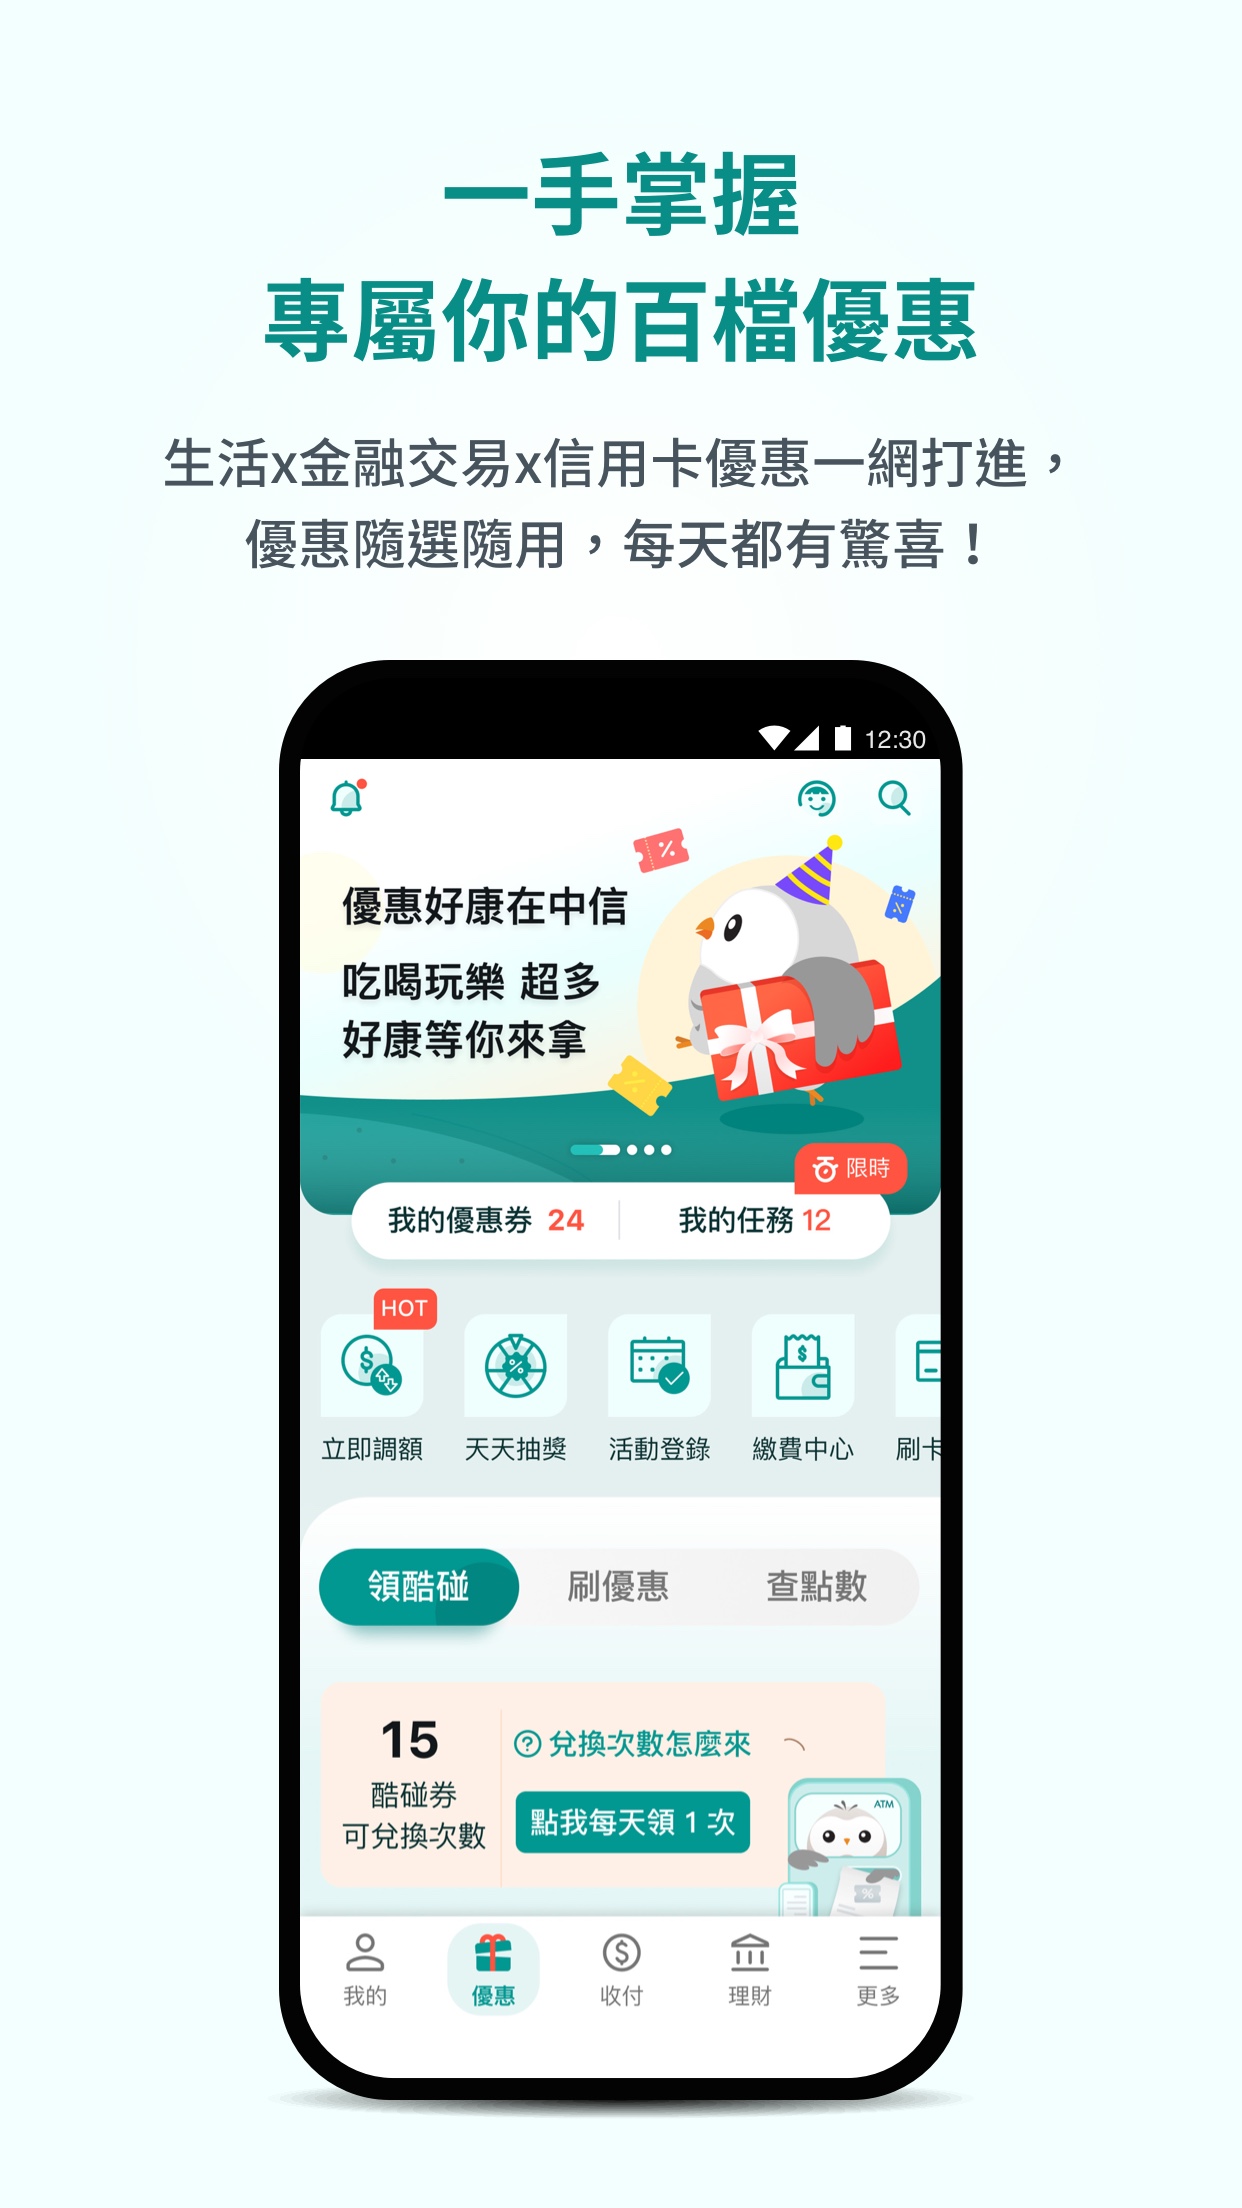 Android application 中國信託行動銀行 Home Bank screenshort